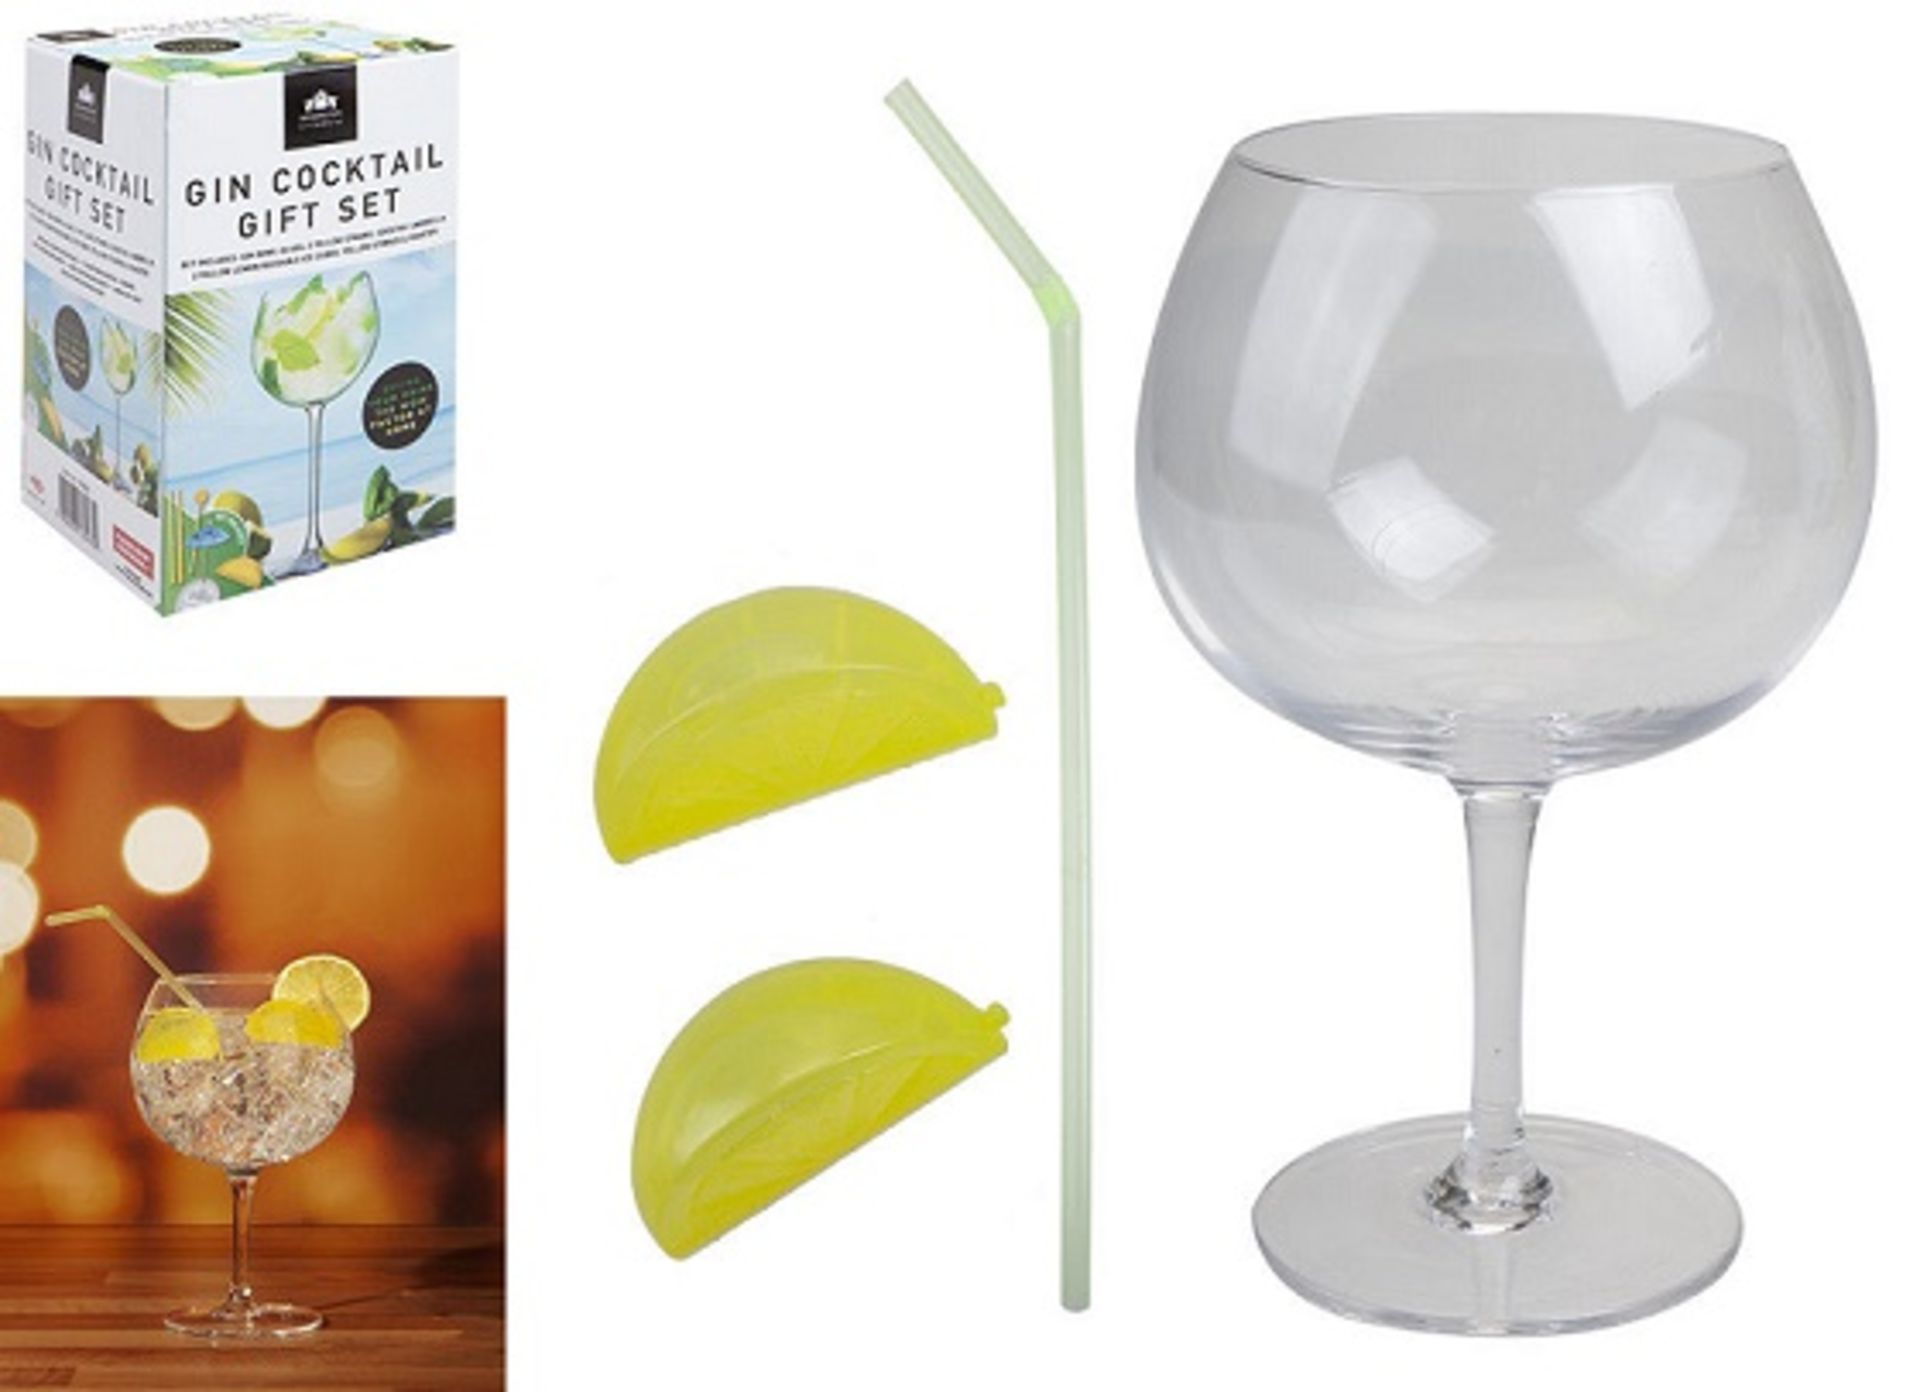 + VAT Brand New Kensington Gin Cocktail Gift Set Includes Gin Bowl Glass-Straw-Two Lemon Reusable